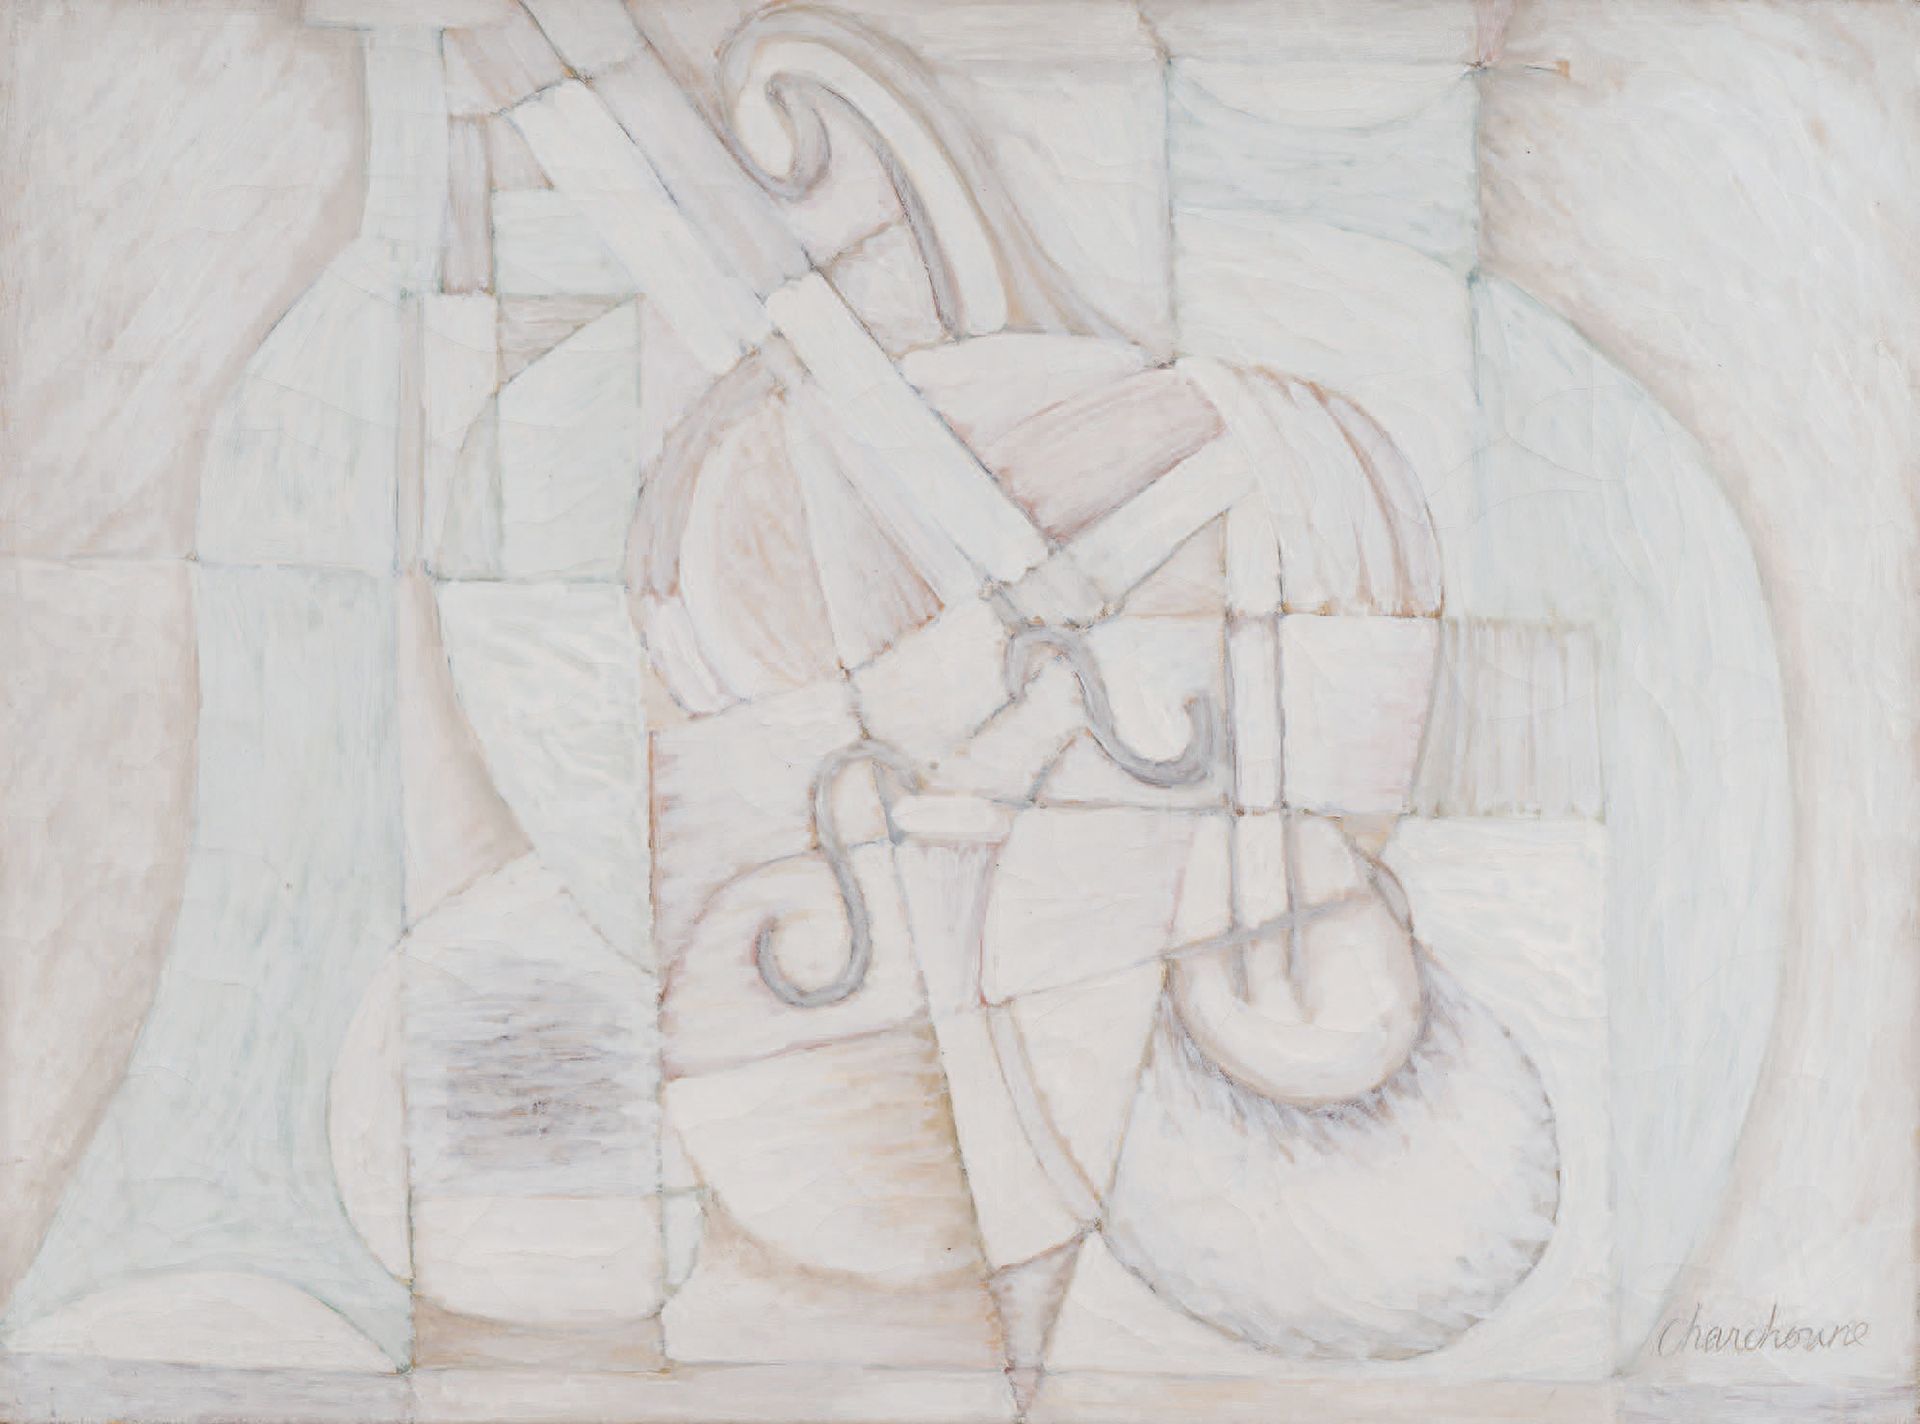 Serge CHARCHOUNE (1888-1975) Violín blanco, 1946
Óleo sobre lienzo.
Firmado abaj&hellip;